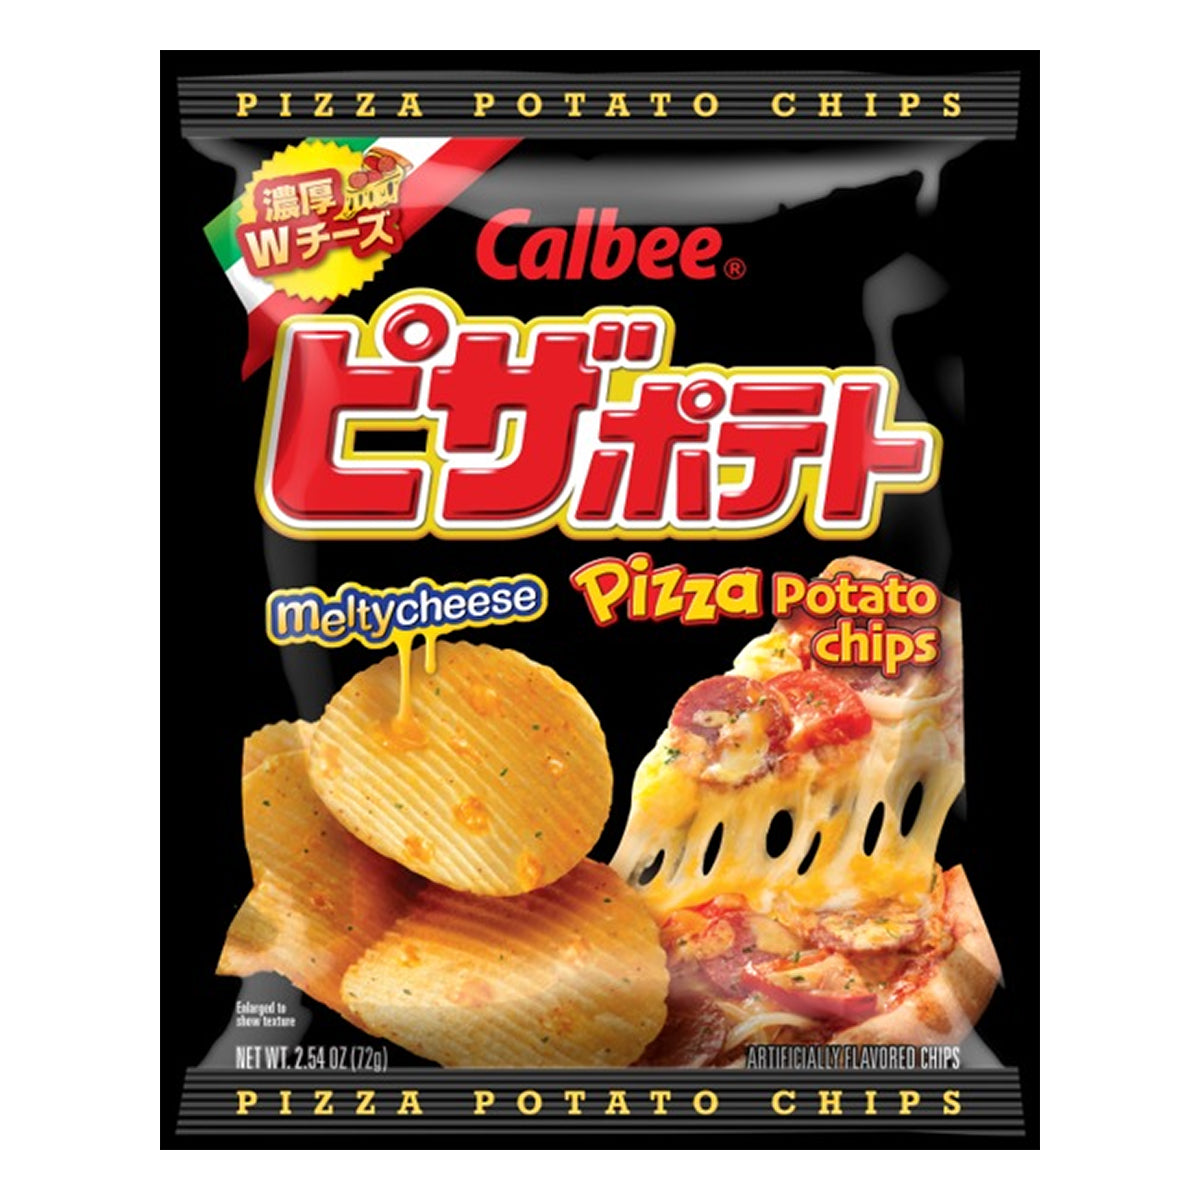 calbee melty cheese pizza potato chips - 2.54oz